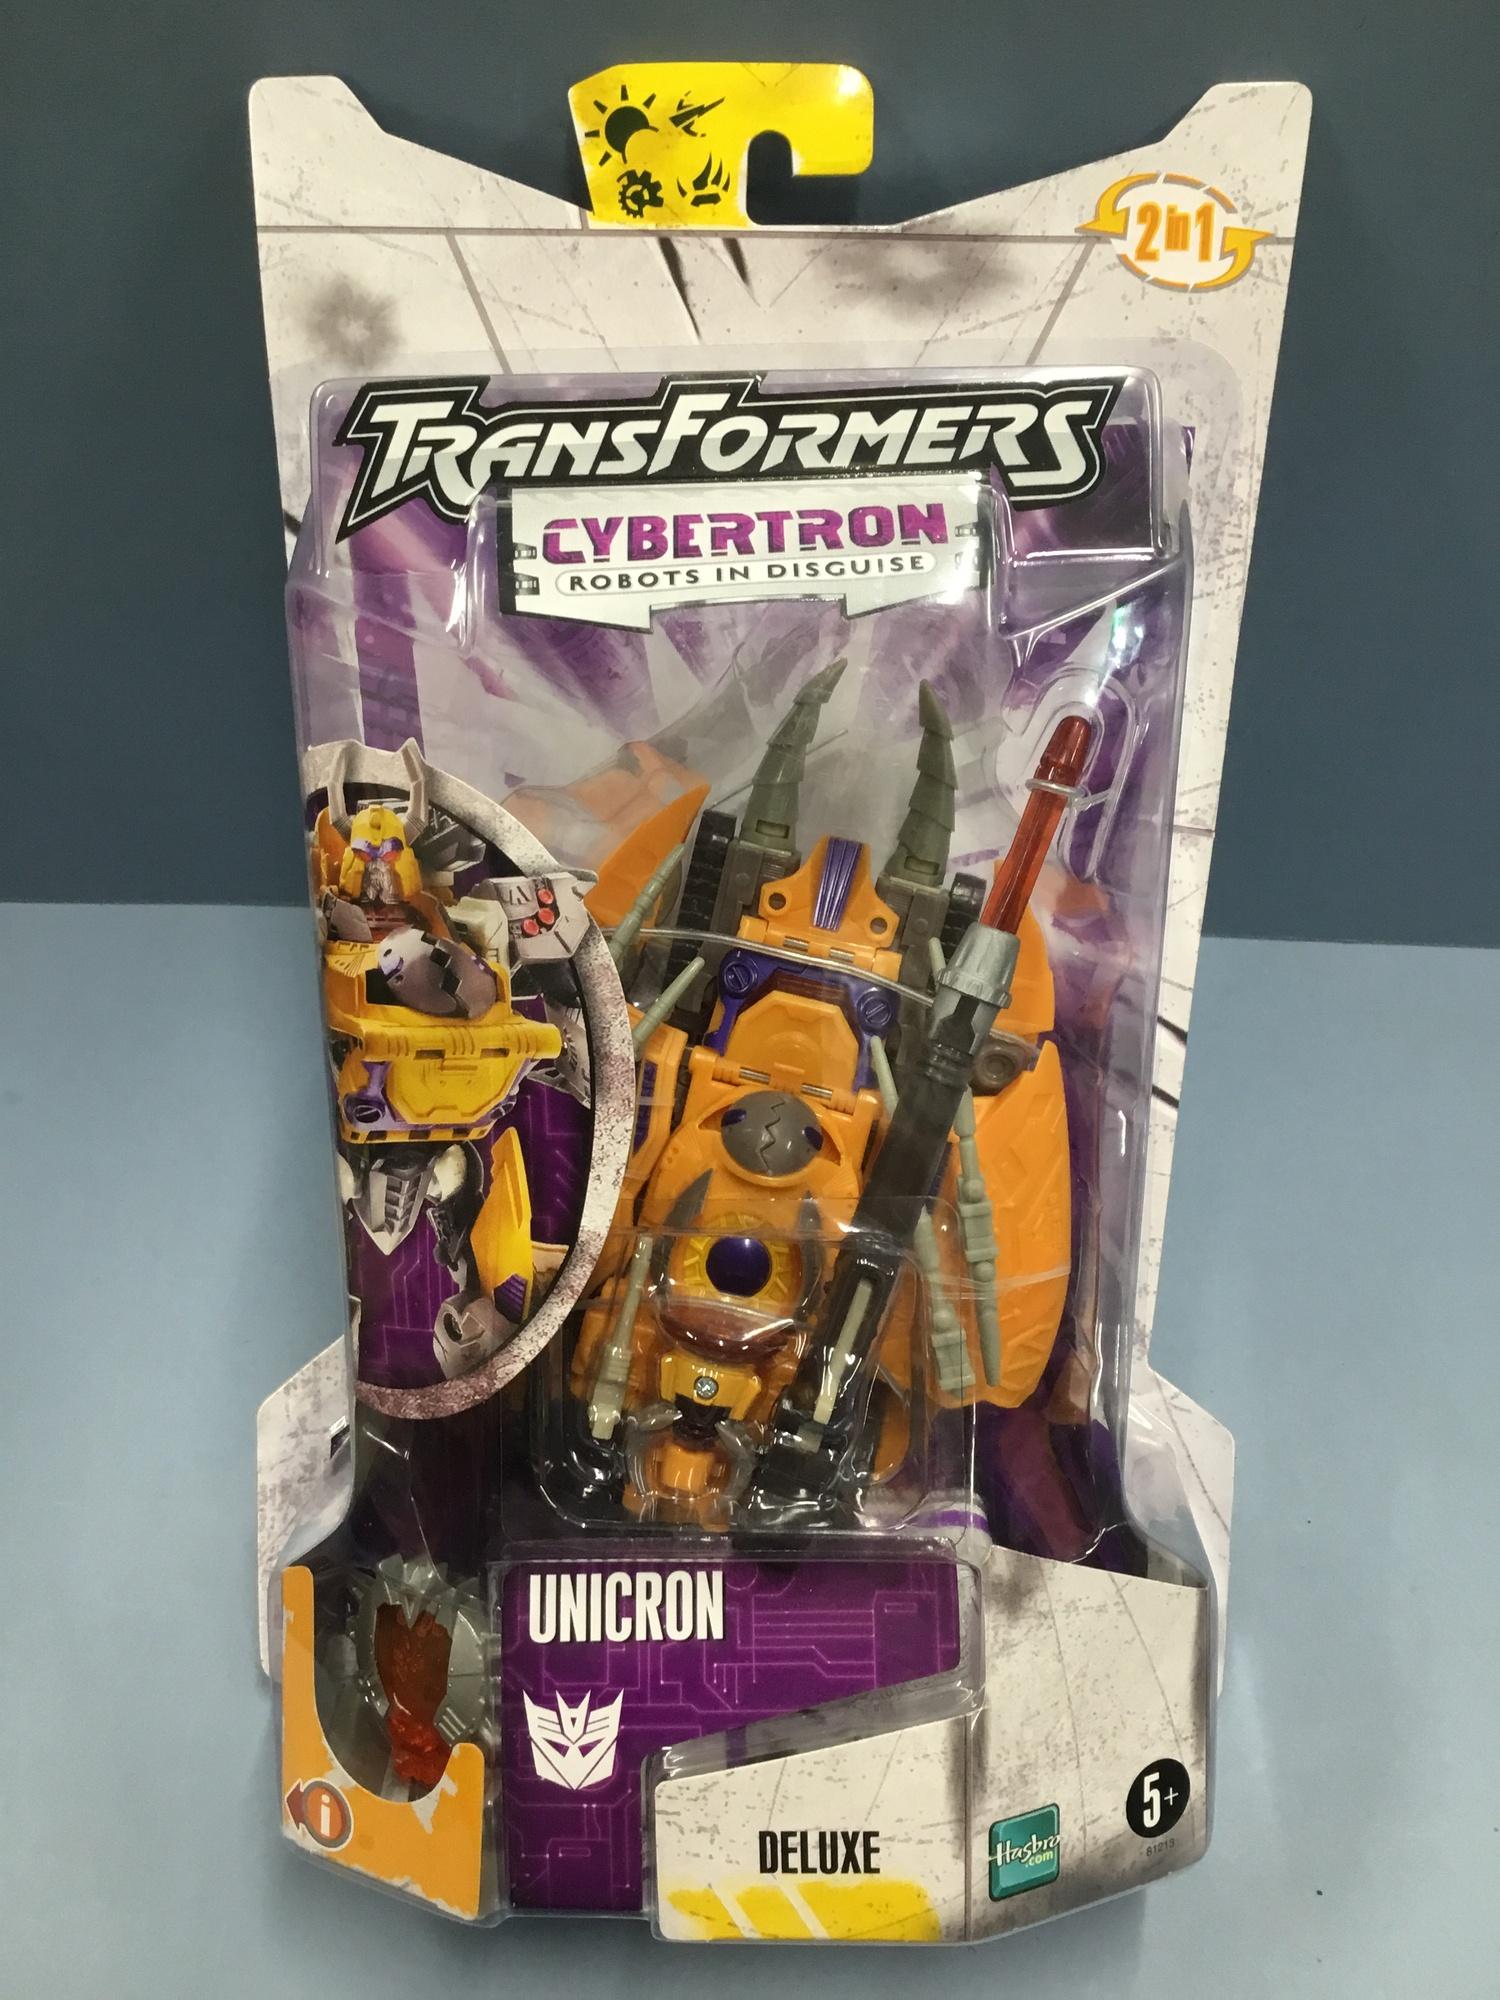 50 - Transformers Cybertron Unicron